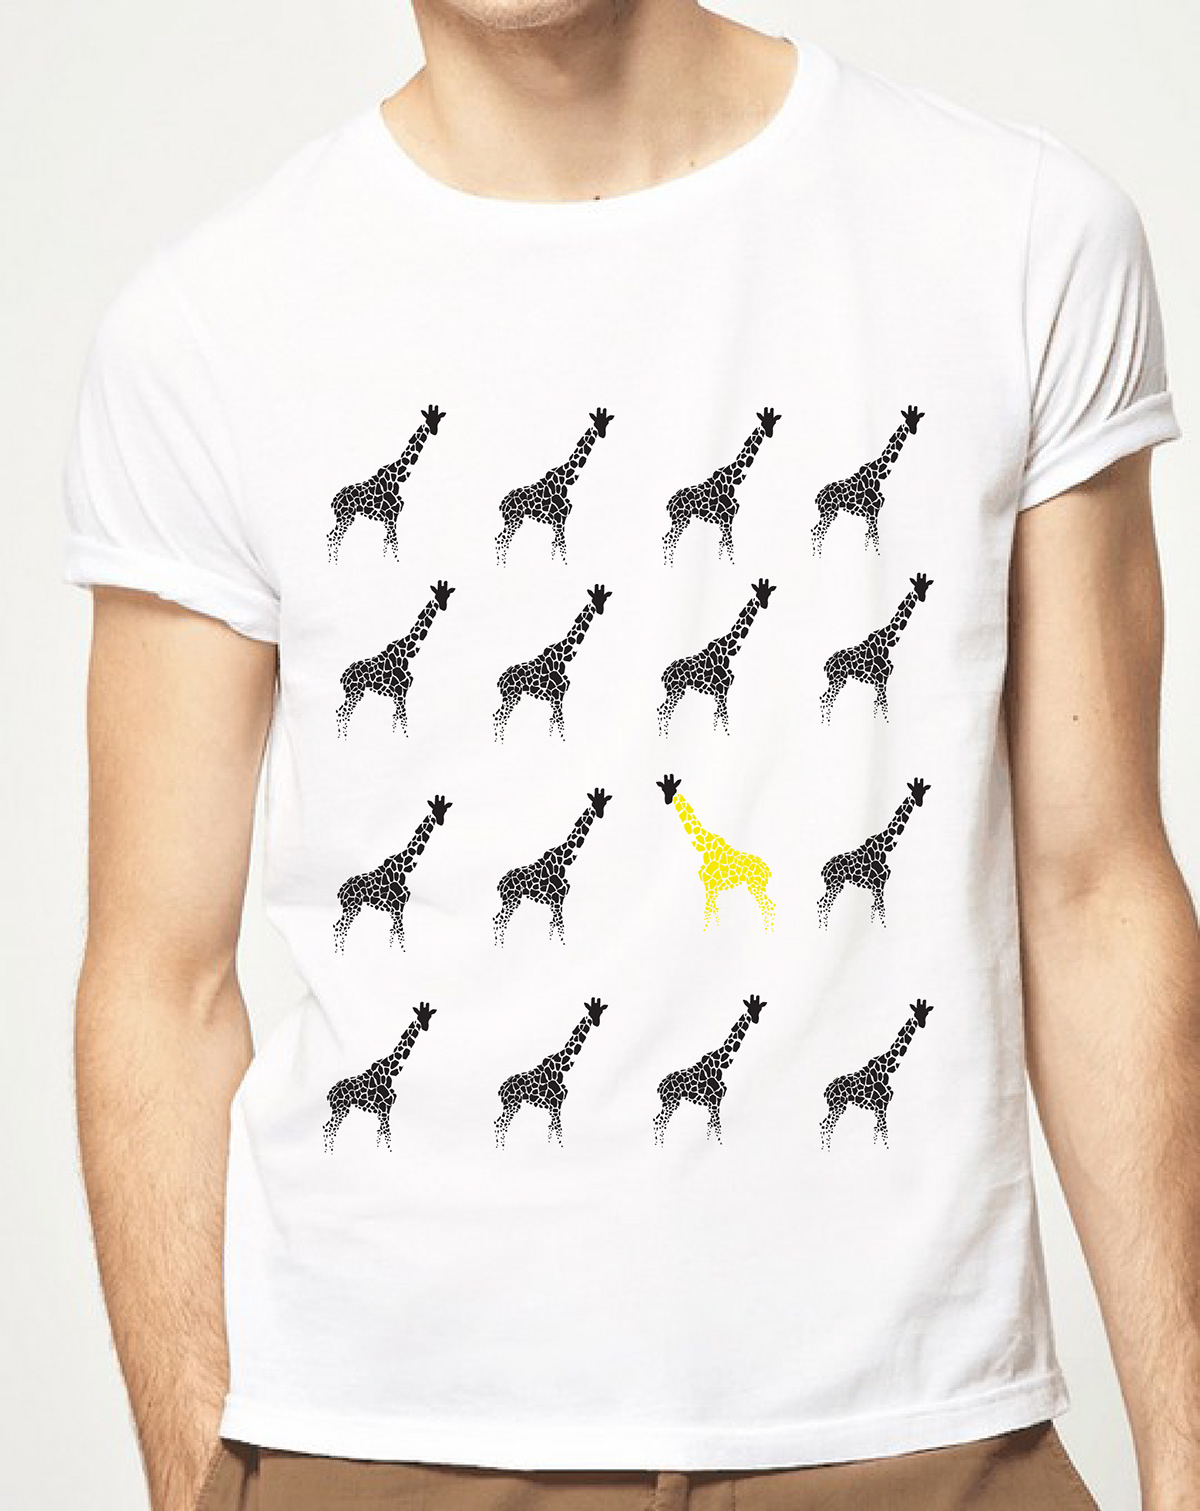 Clothing t-shirts screen printing design animals Urban